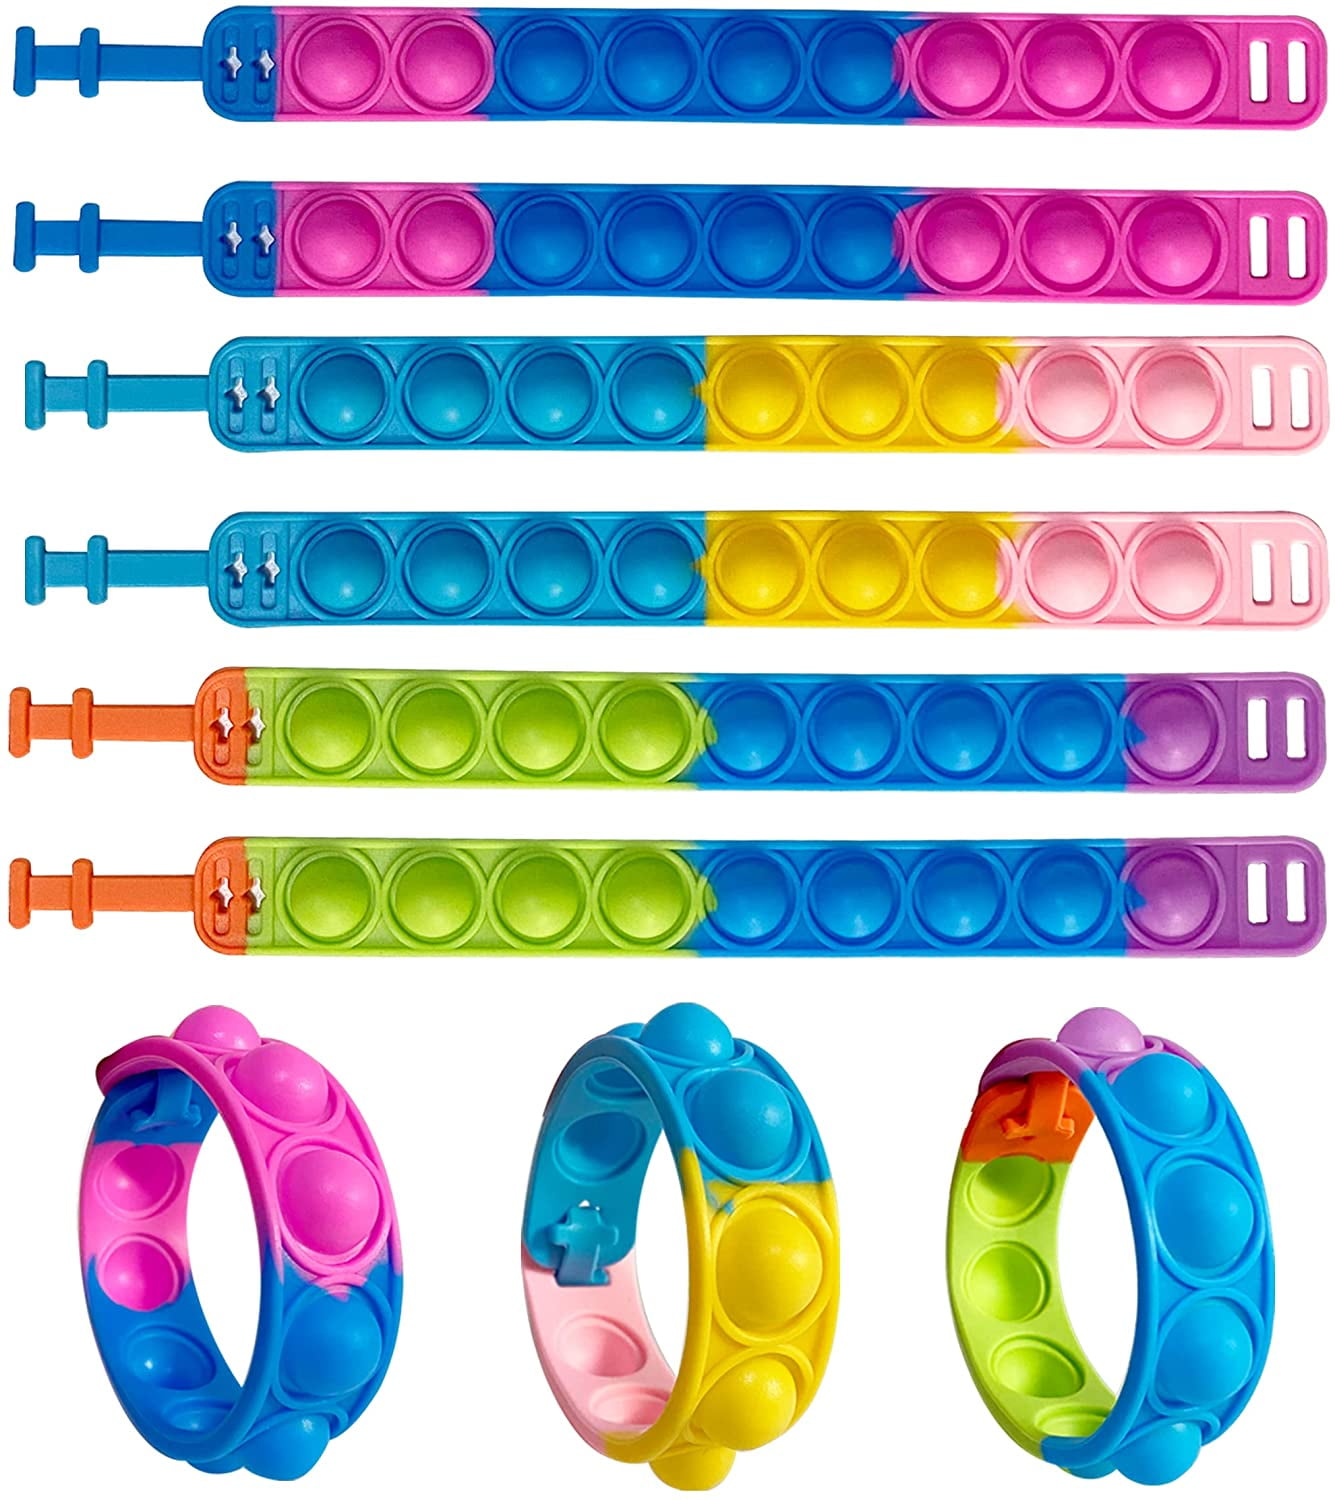 Updated and Adjustable Multicolor Stress Relief Finger Press Bracelet for Kids and Adults ADHD ADD Autism 24 Pcs Push Pop Fidget Toy Fidget Bracelet 24 PCS-Adjustable